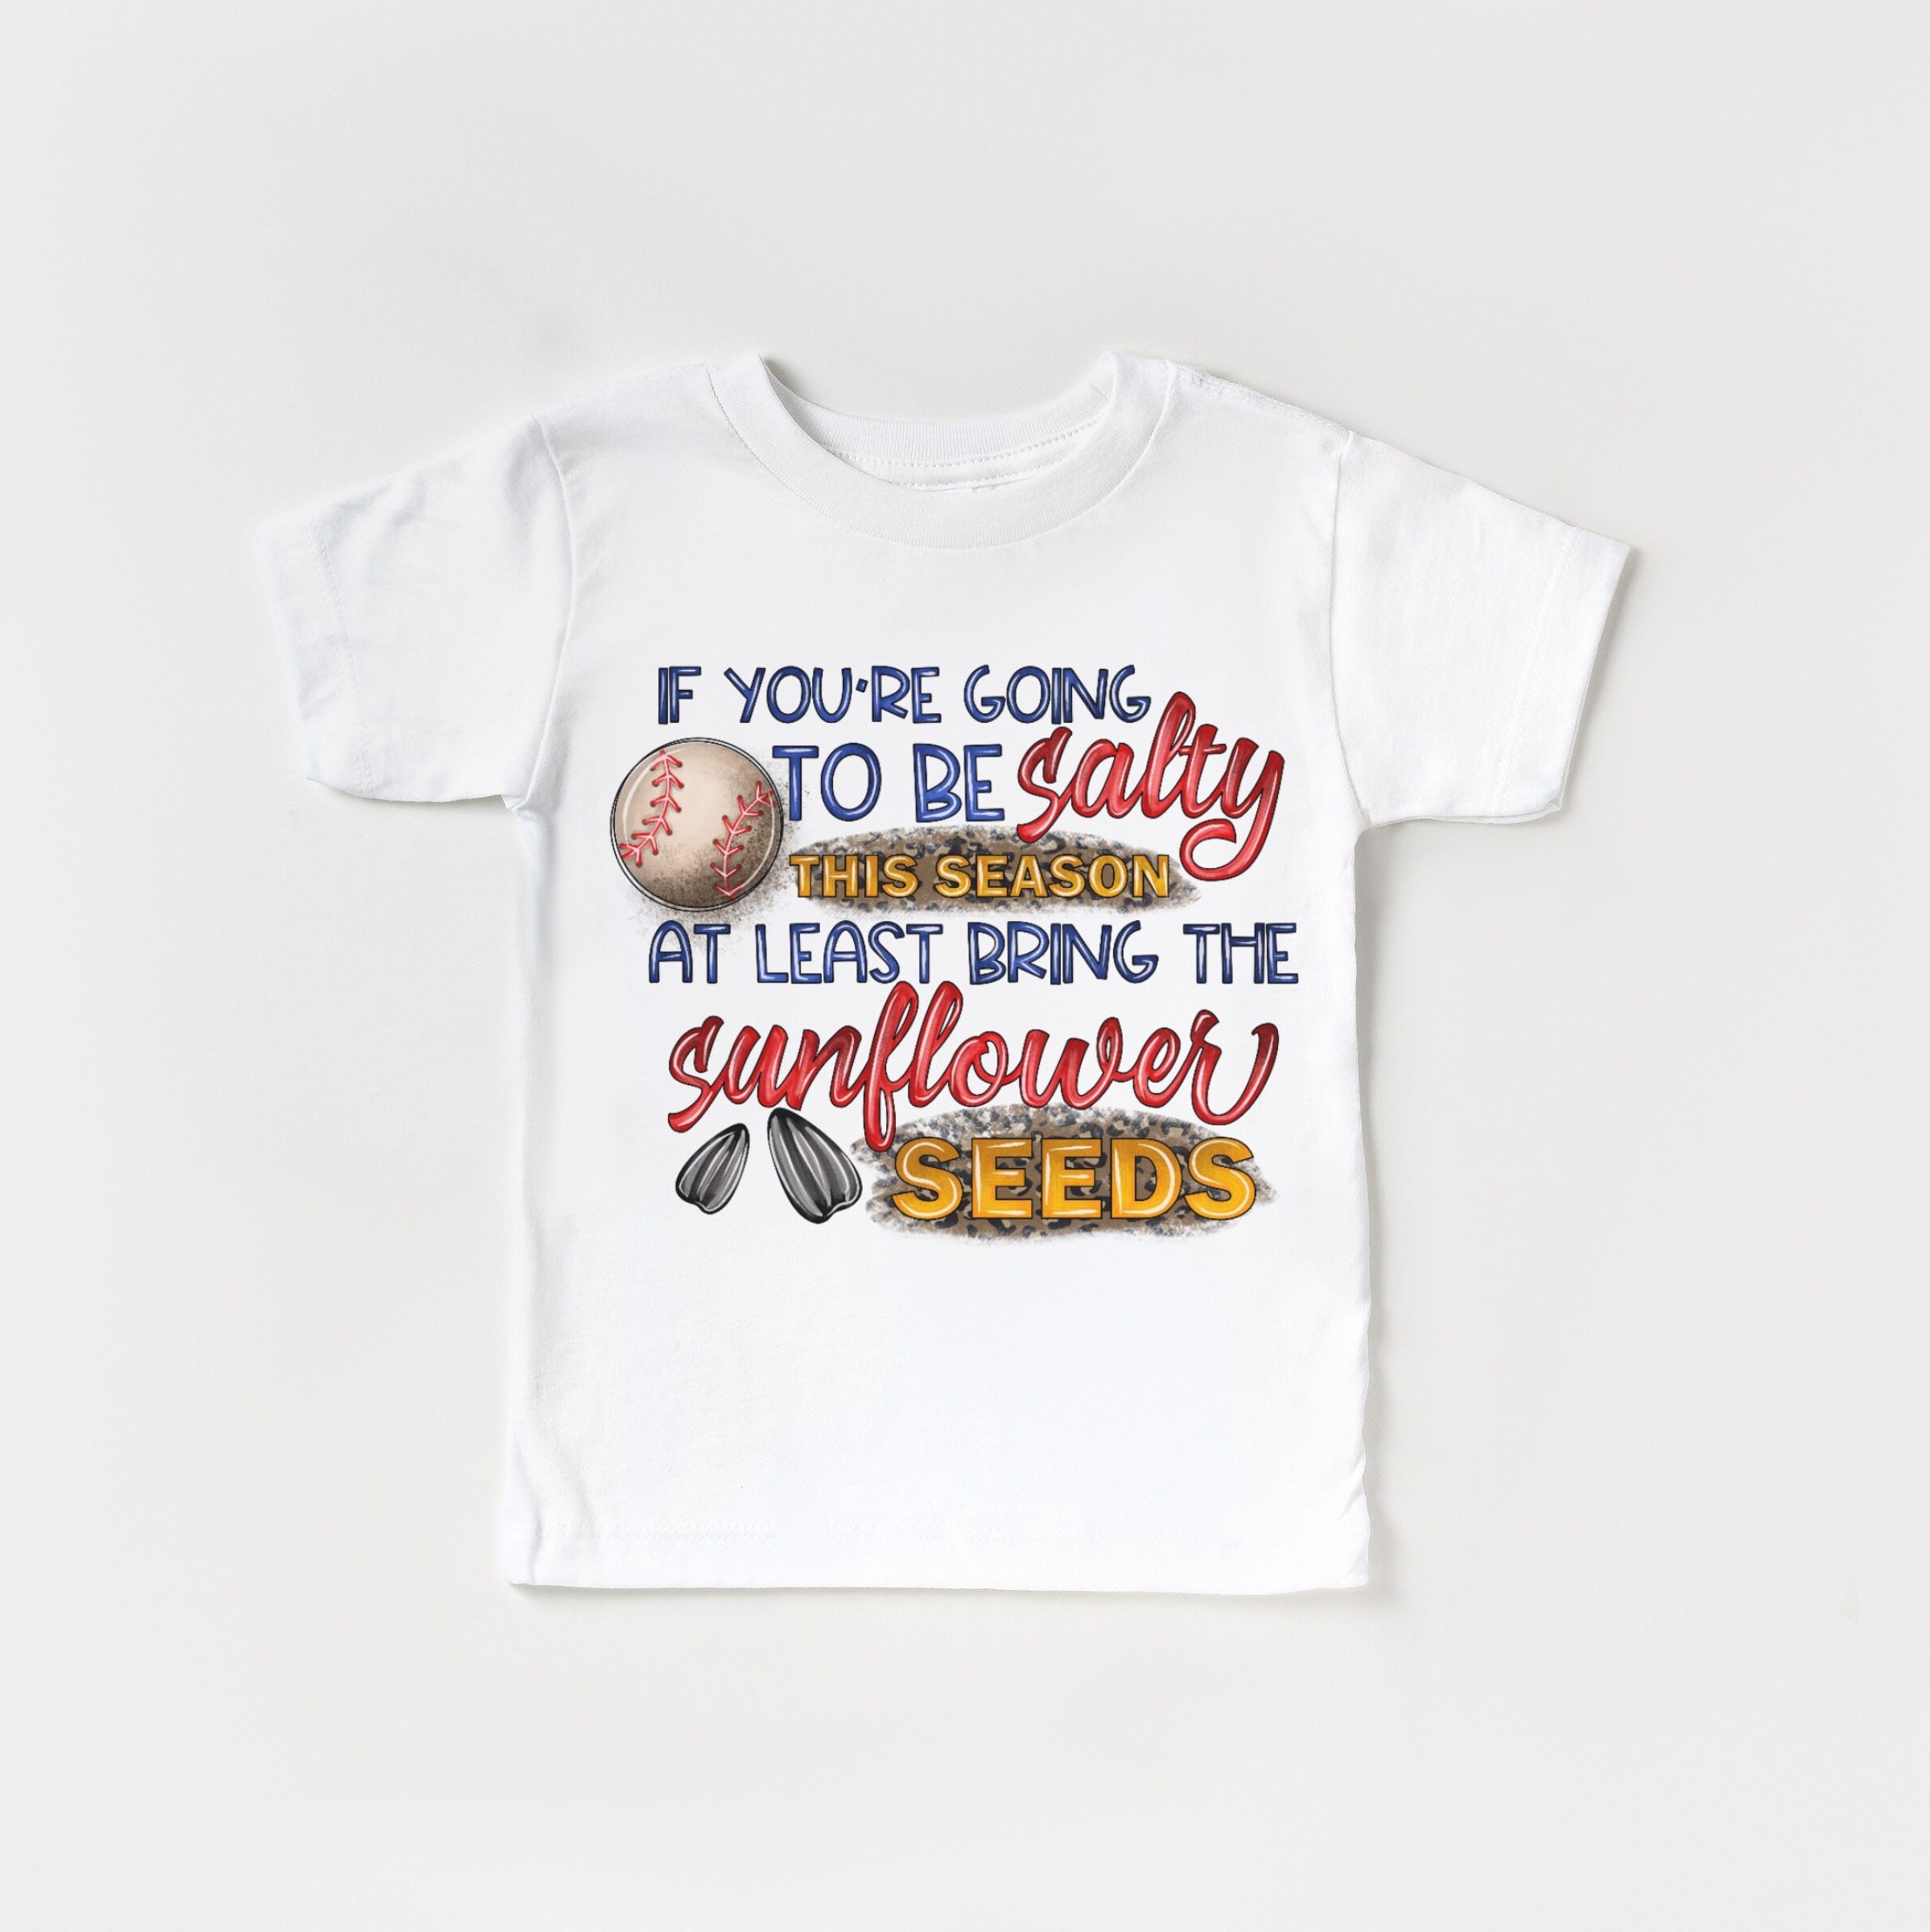 Kids Baseball Shirt, Toddler Baseball Shirt, Boys Baseball Shirt, Funny Shirt, Youth Baseball Shirt, Baby Baseball Outfit, Funny Kids Shirt